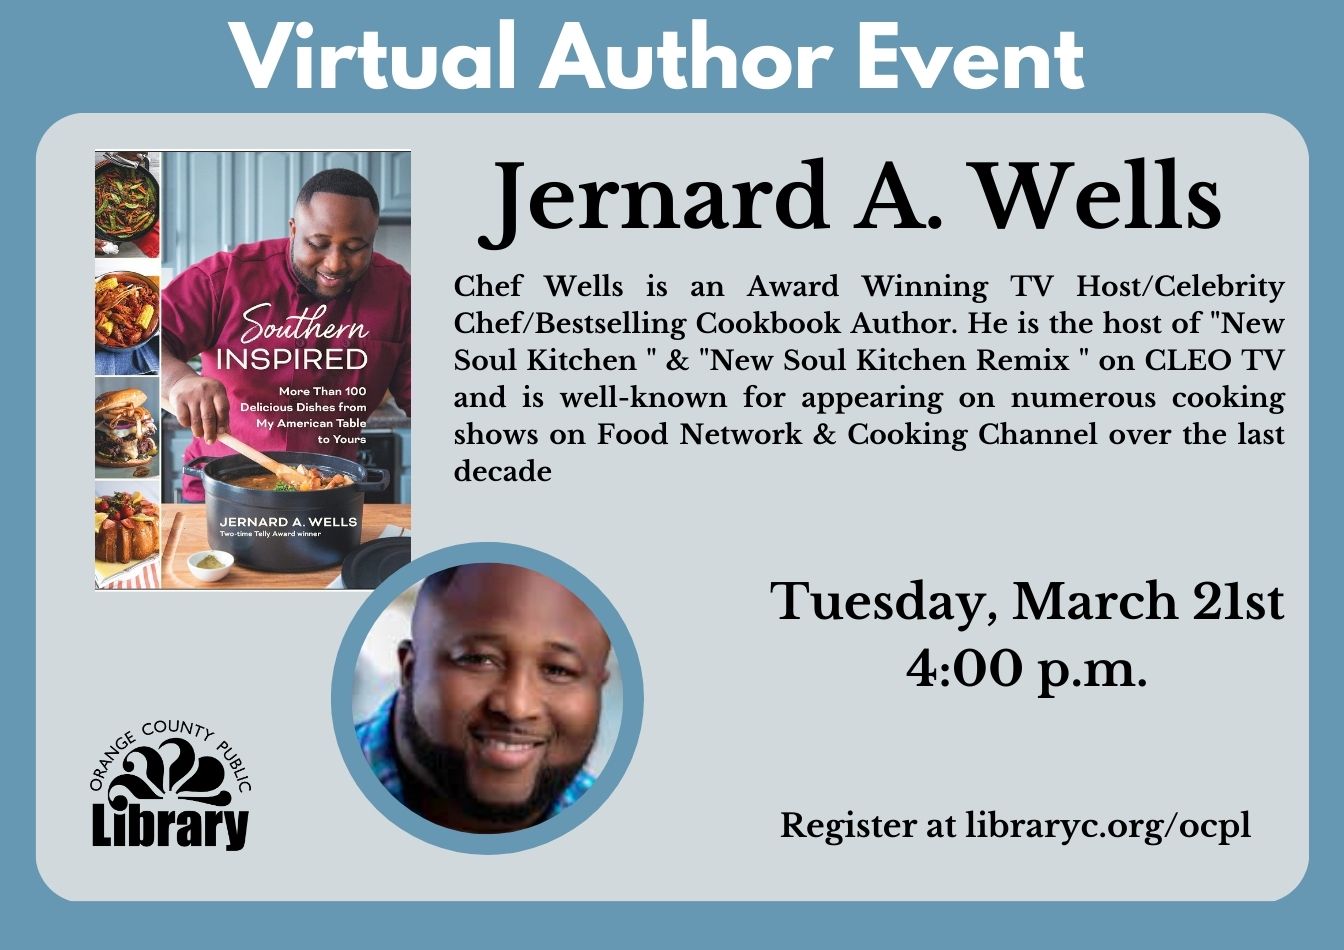 Virtual Author Event: Chef Jernard A. Wells